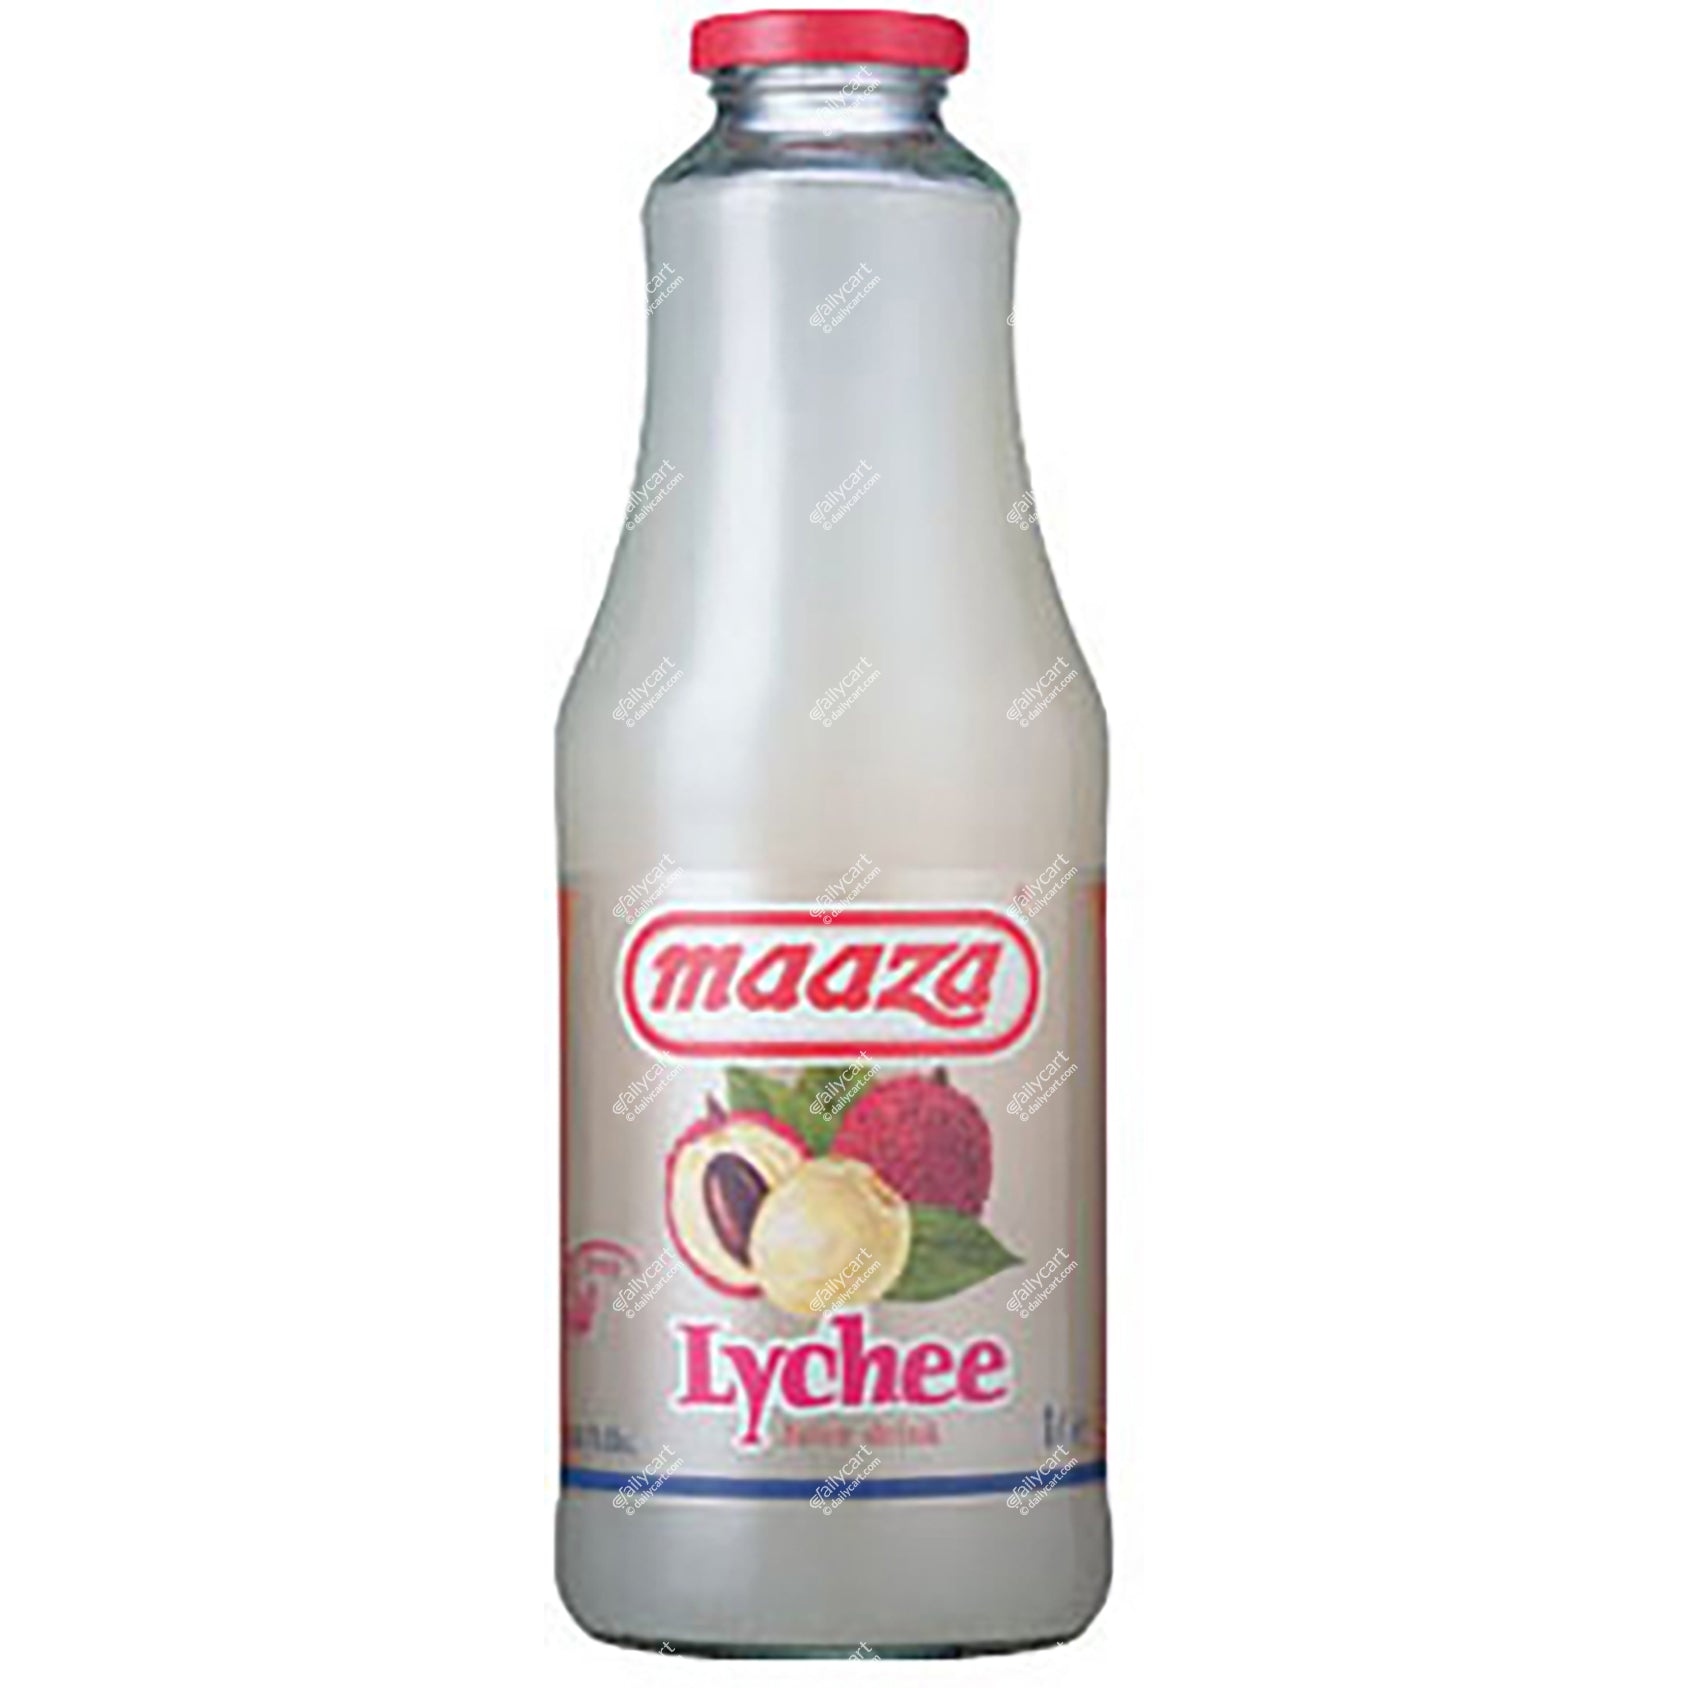 Maaza Lychee Juice, 1 litre, Glass Bottle